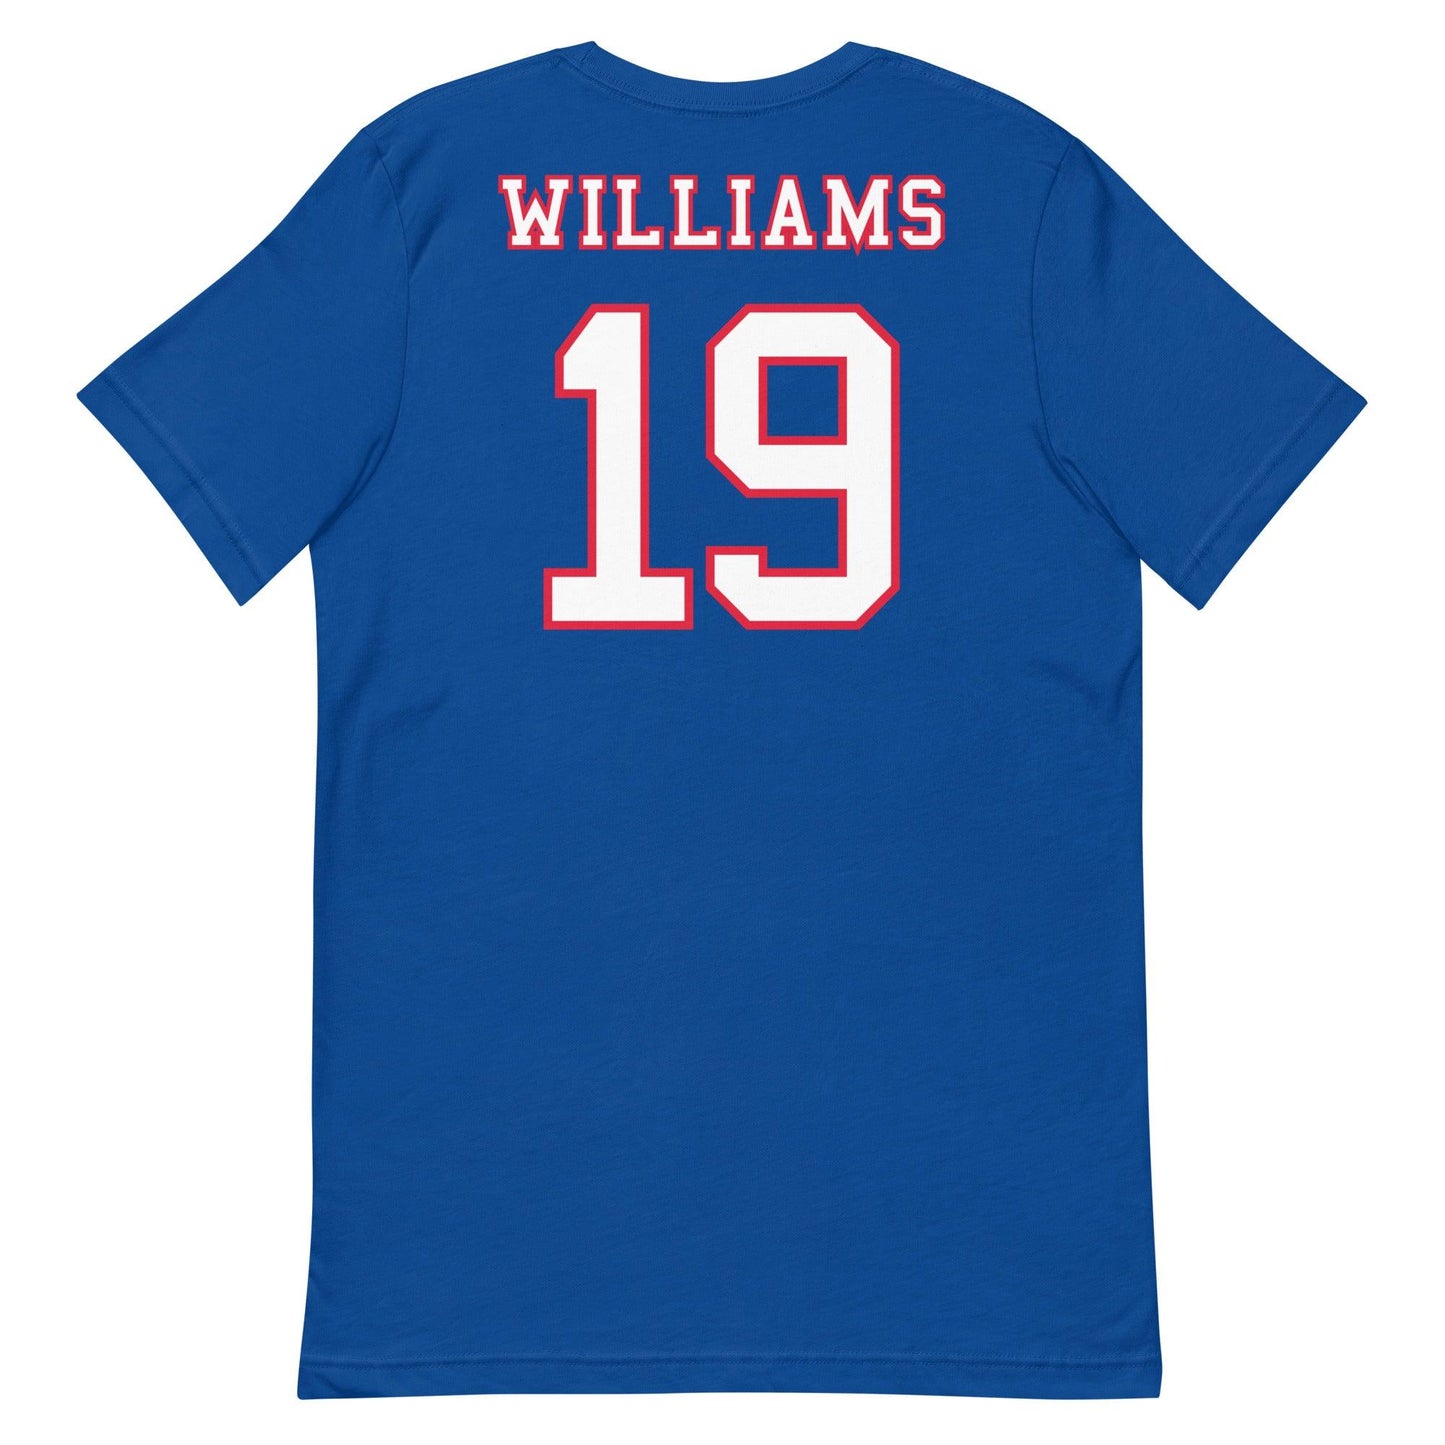 Kaine Williams "Jersey" t-shirt - Fan Arch